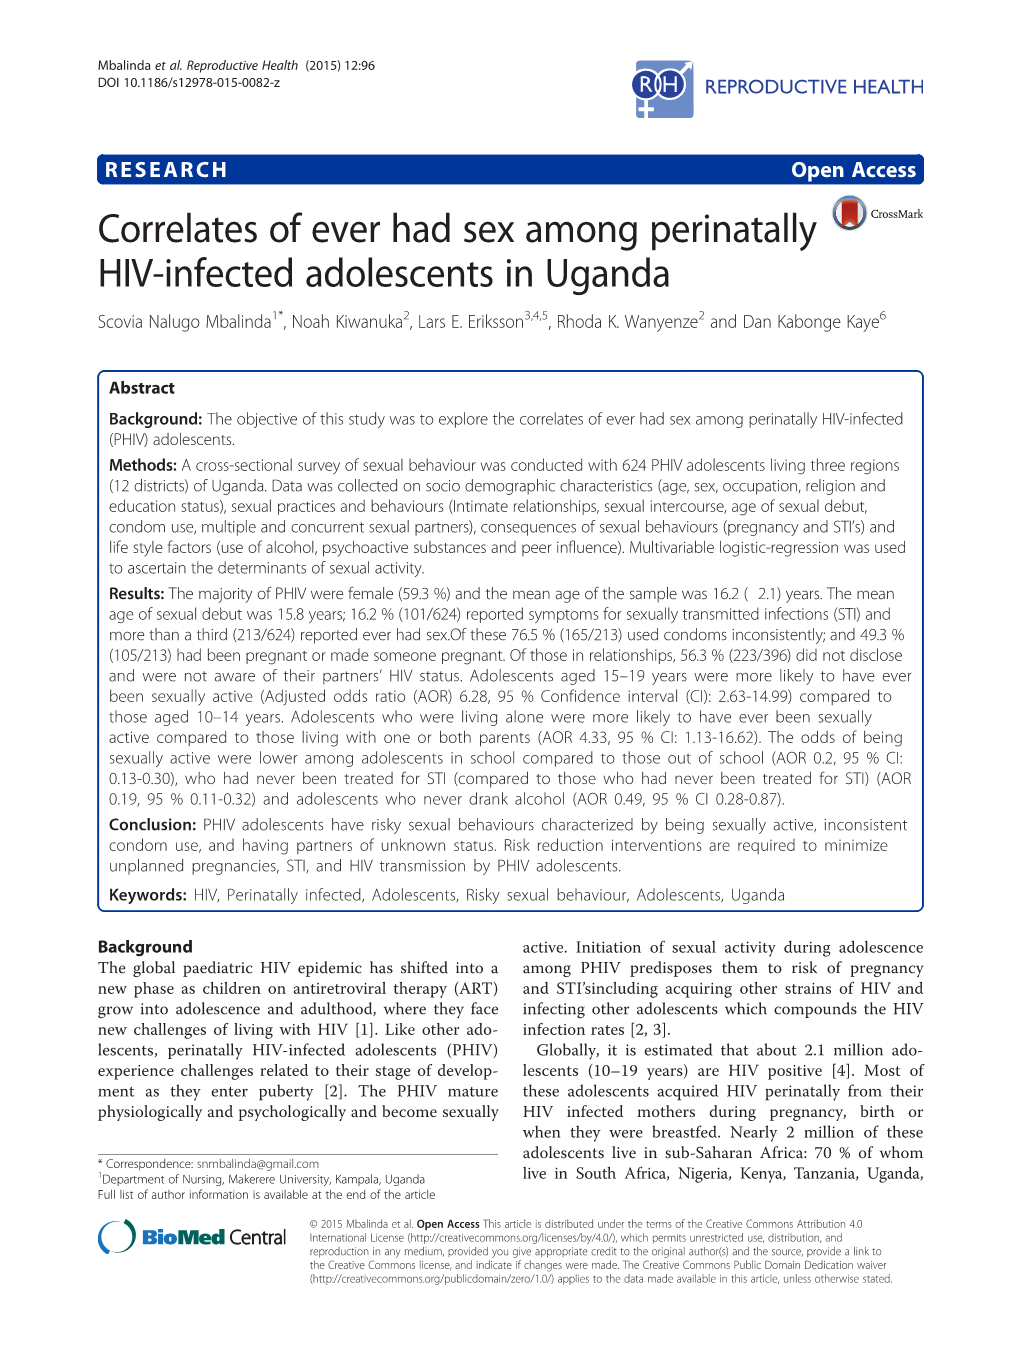 Correlates of Ever Had Sex Among Perinatally HIV-Infected Adolescents in Uganda Scovia Nalugo Mbalinda1*, Noah Kiwanuka2, Lars E